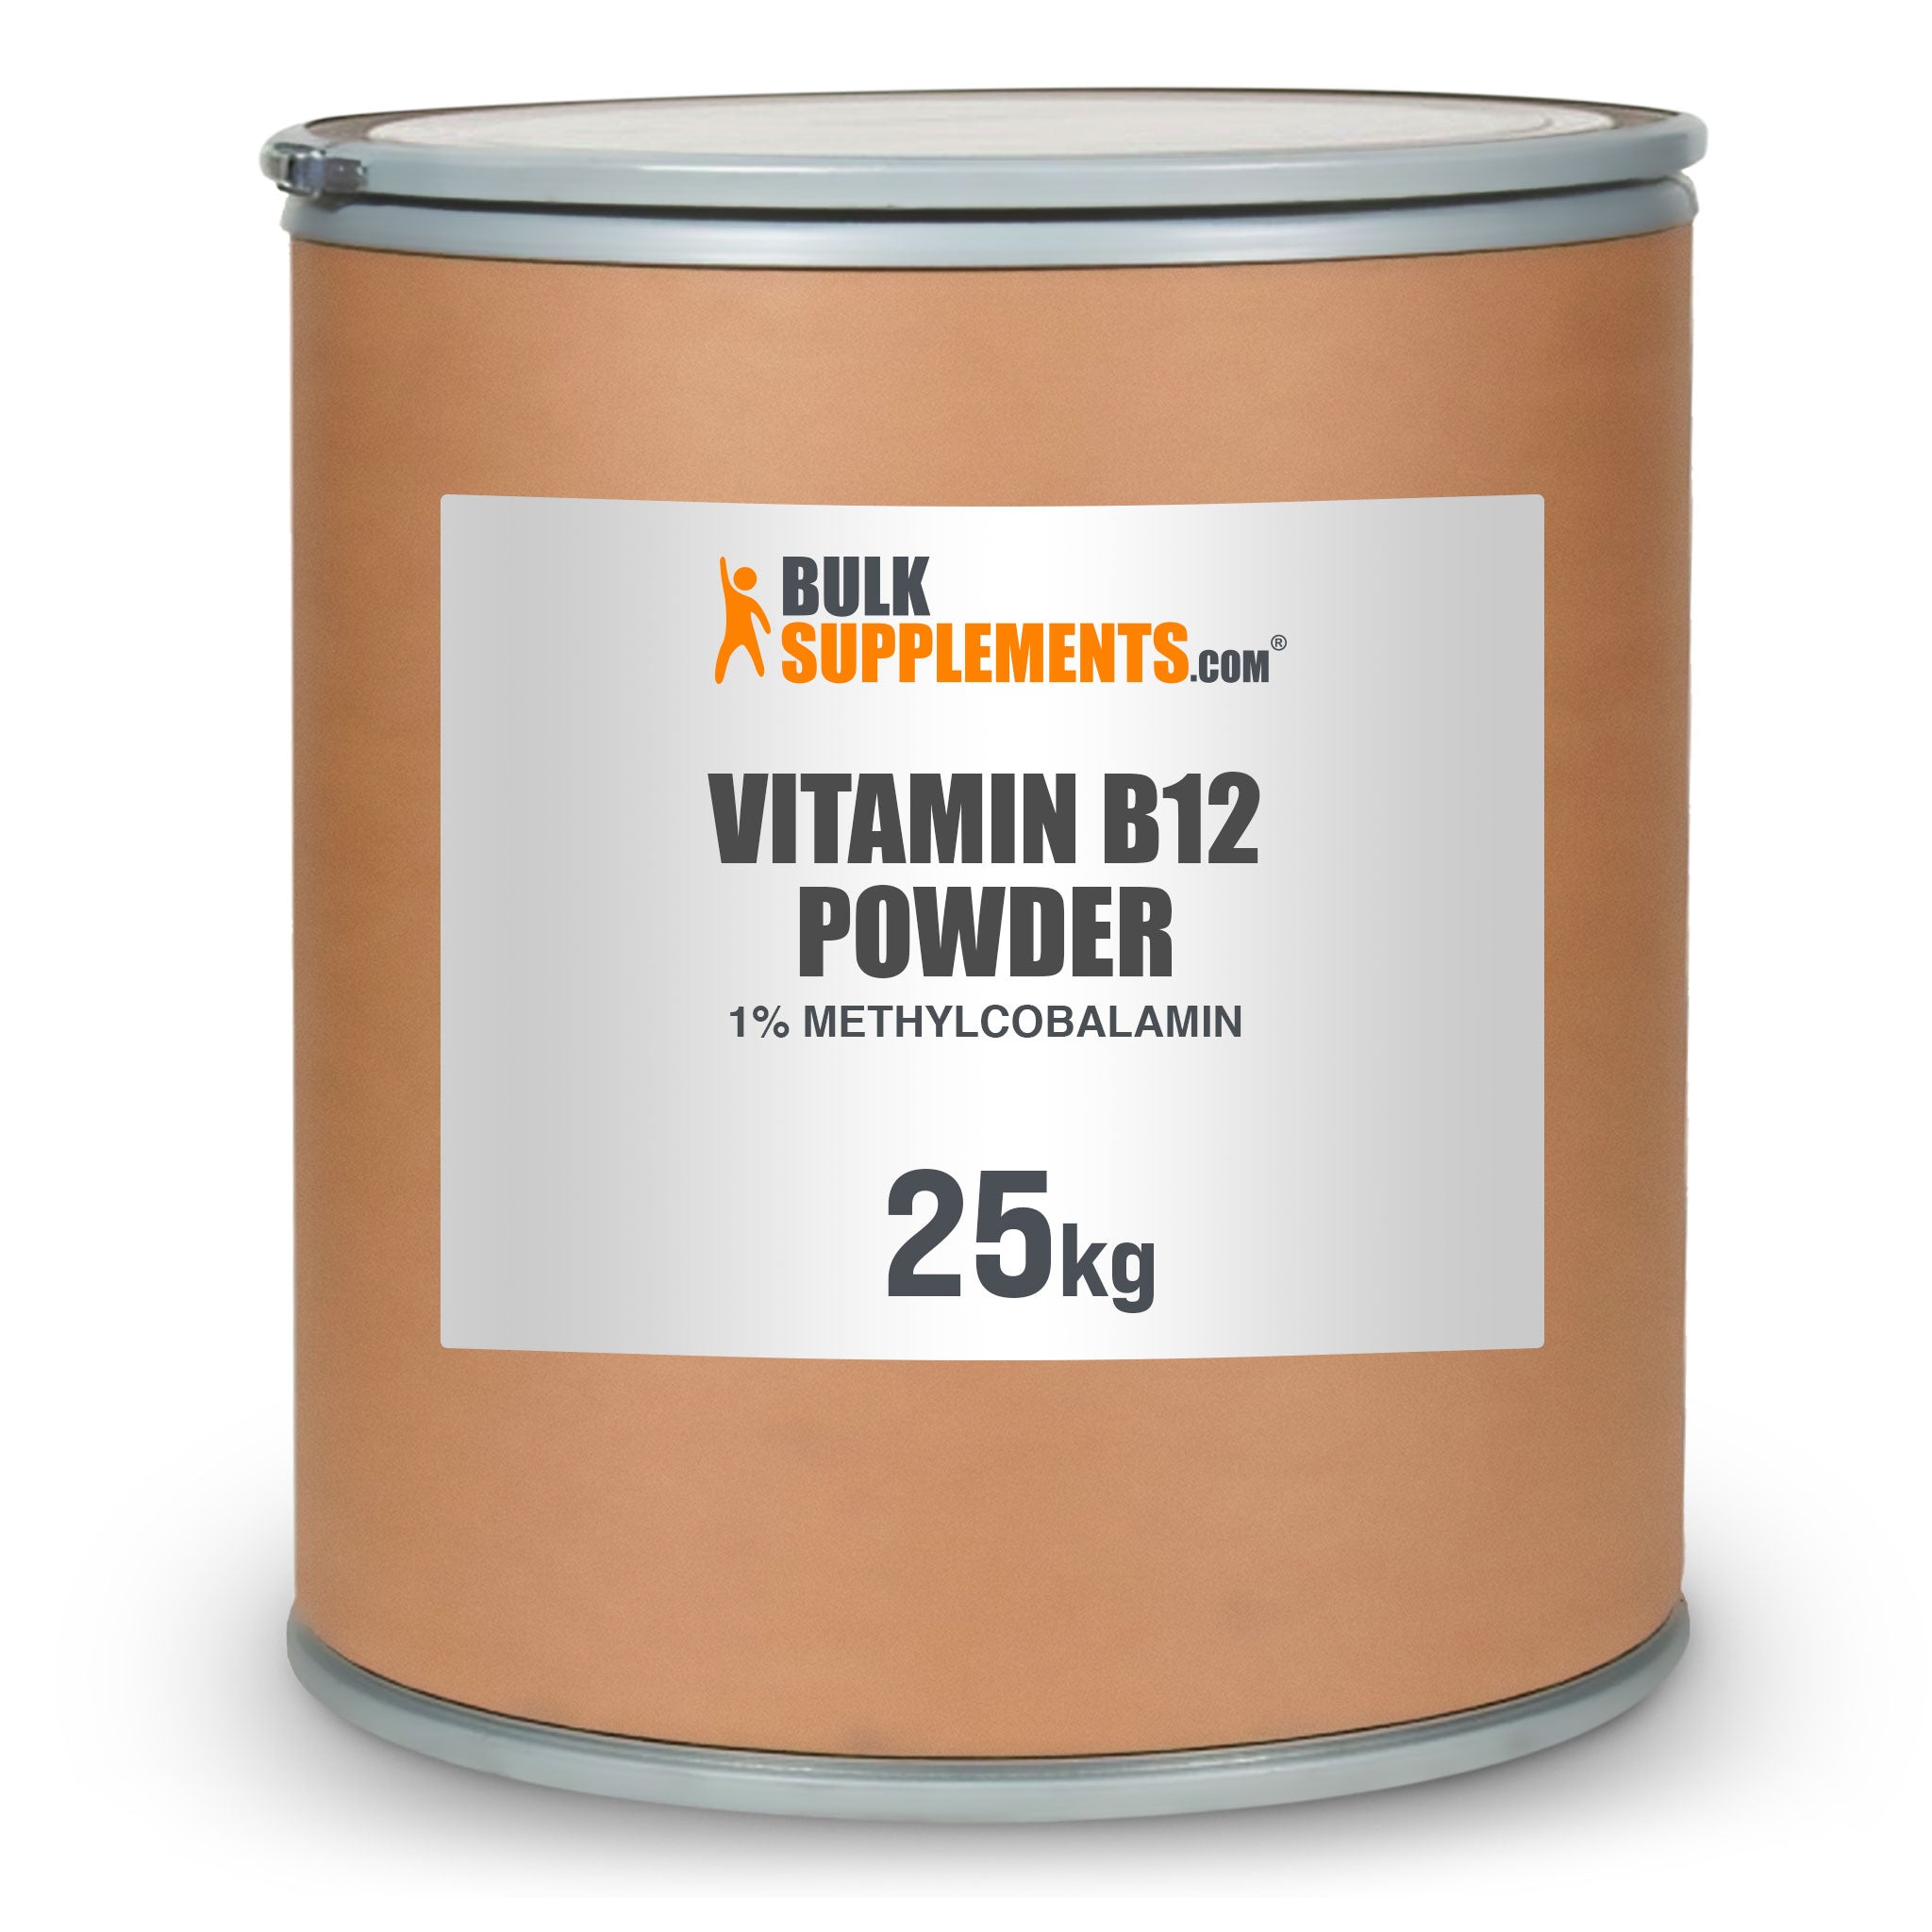 BulkSupplements Vitamin B12 Powder 1% Methylcobalamin 25kg drum